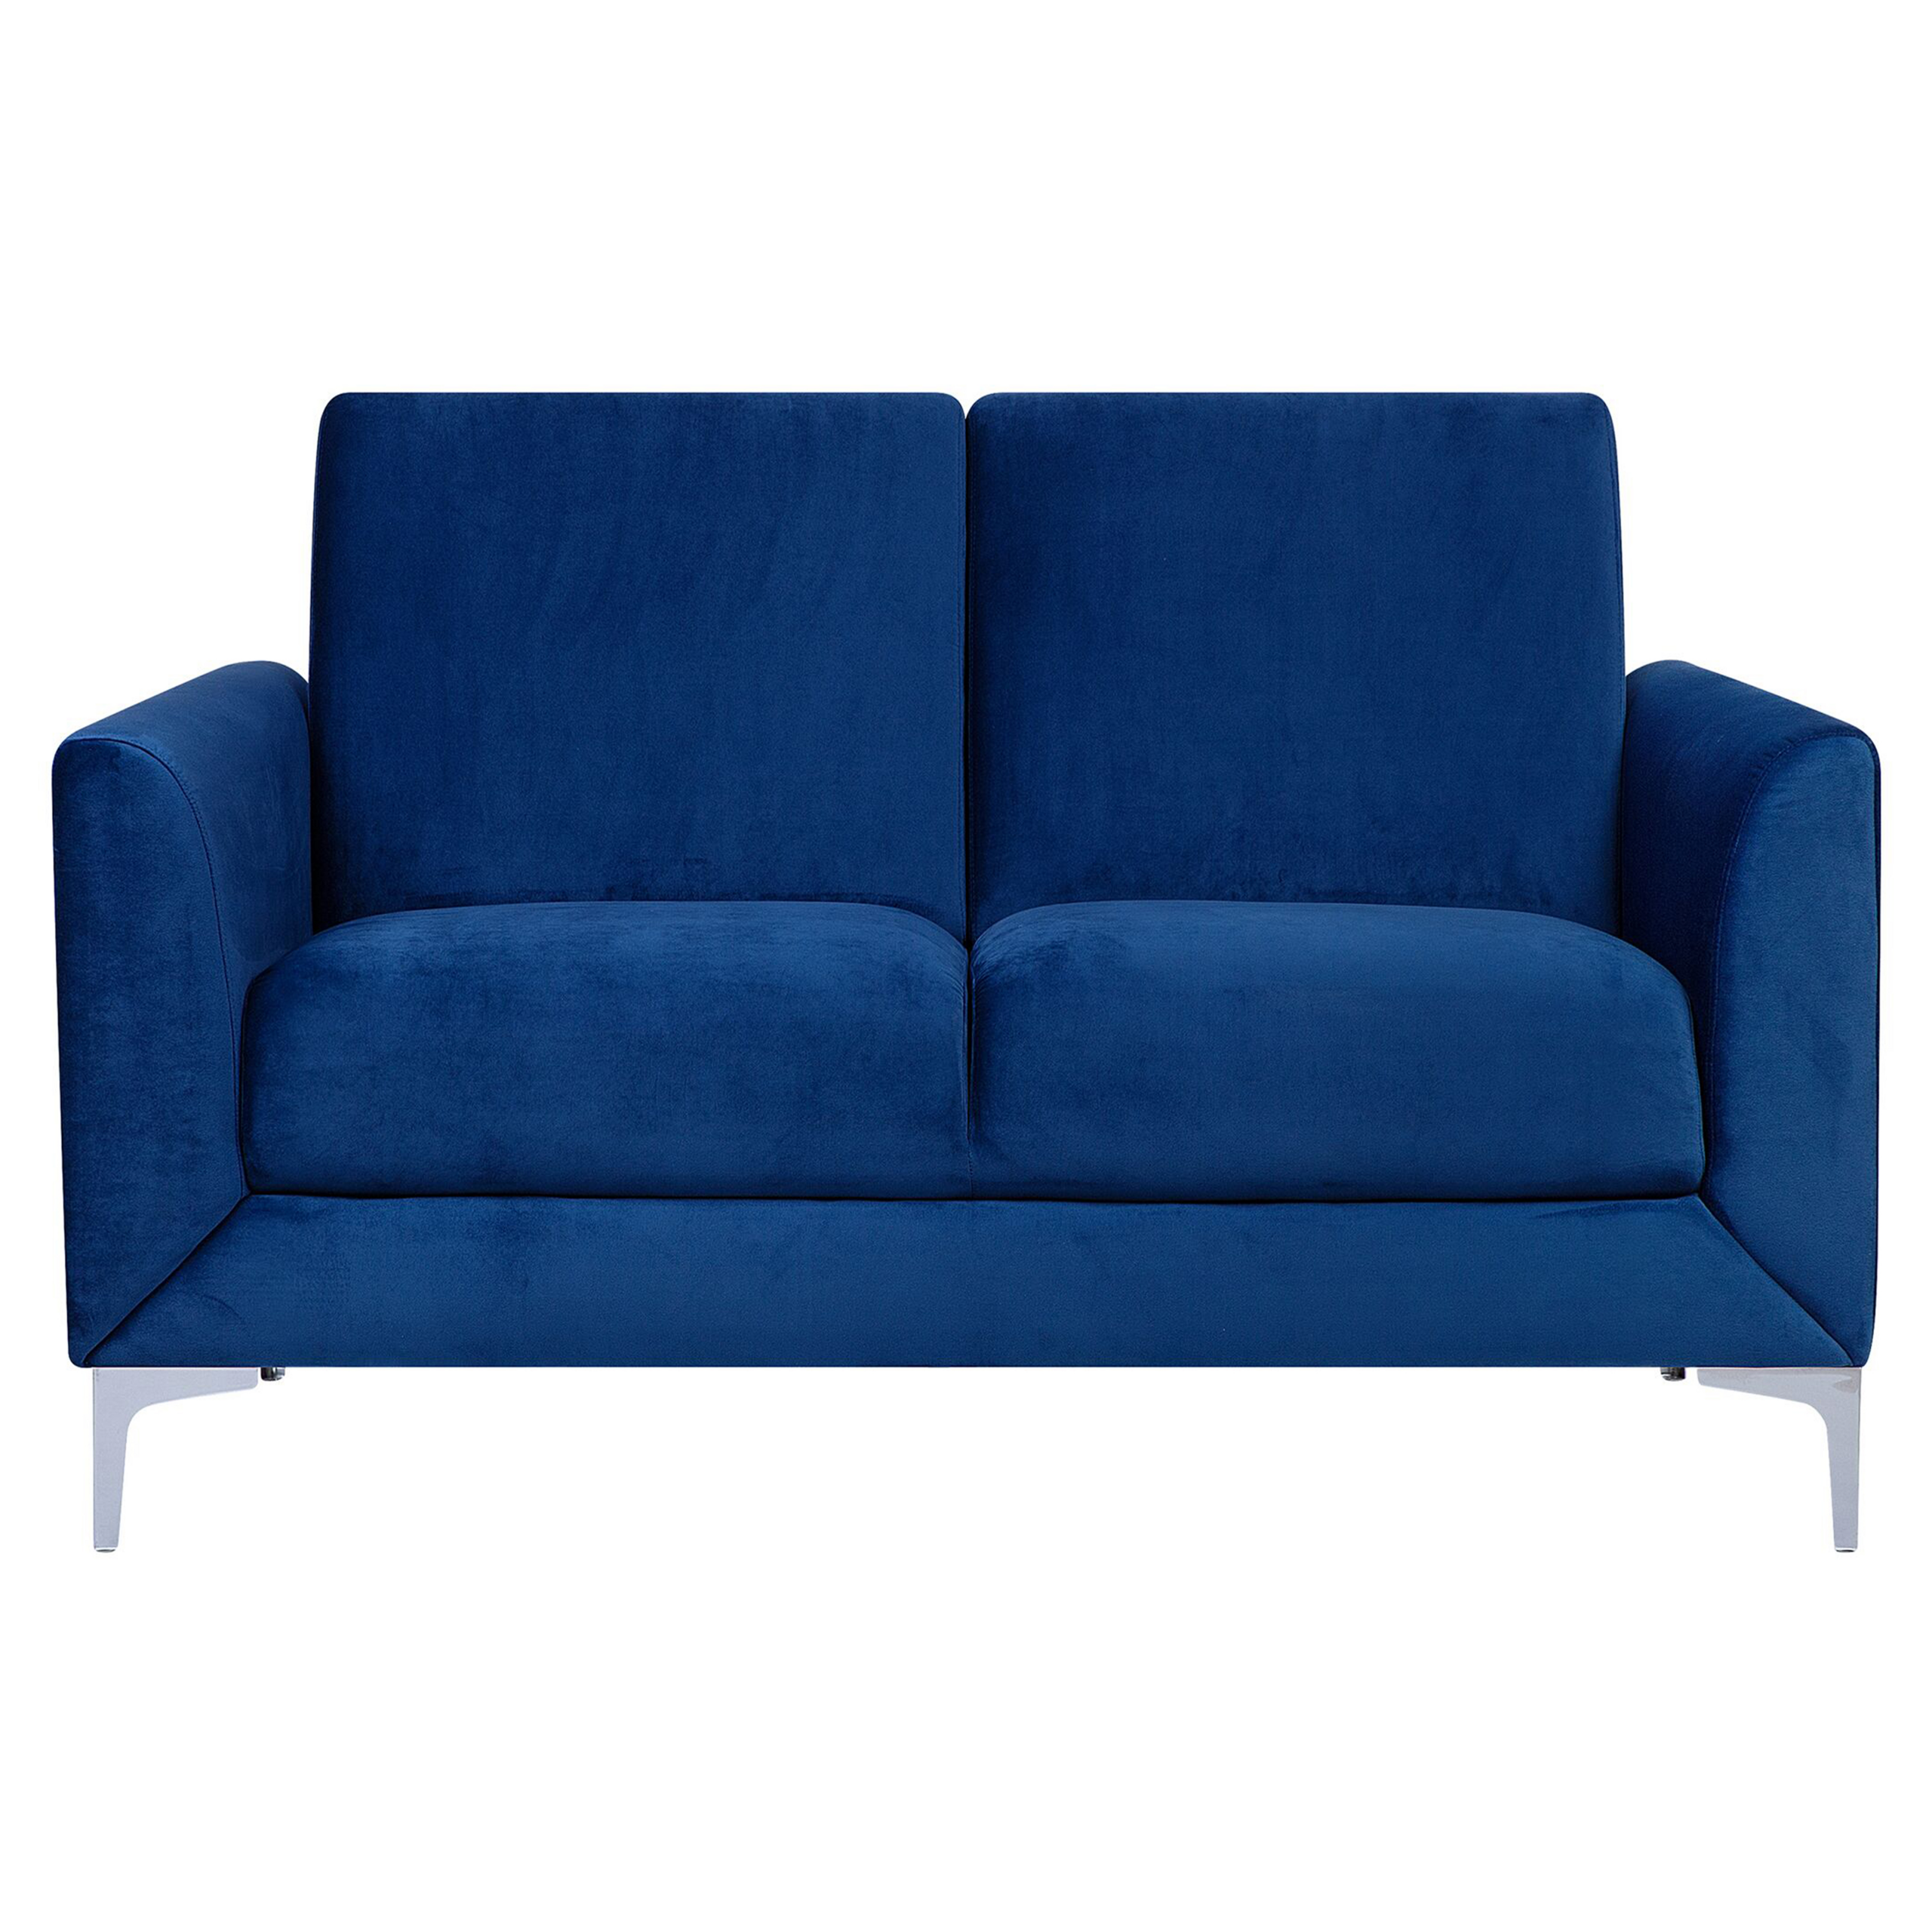 Beliani Sofa Blue Fabric Upholstery Silver Legs 2 Seater Loveseat Glam